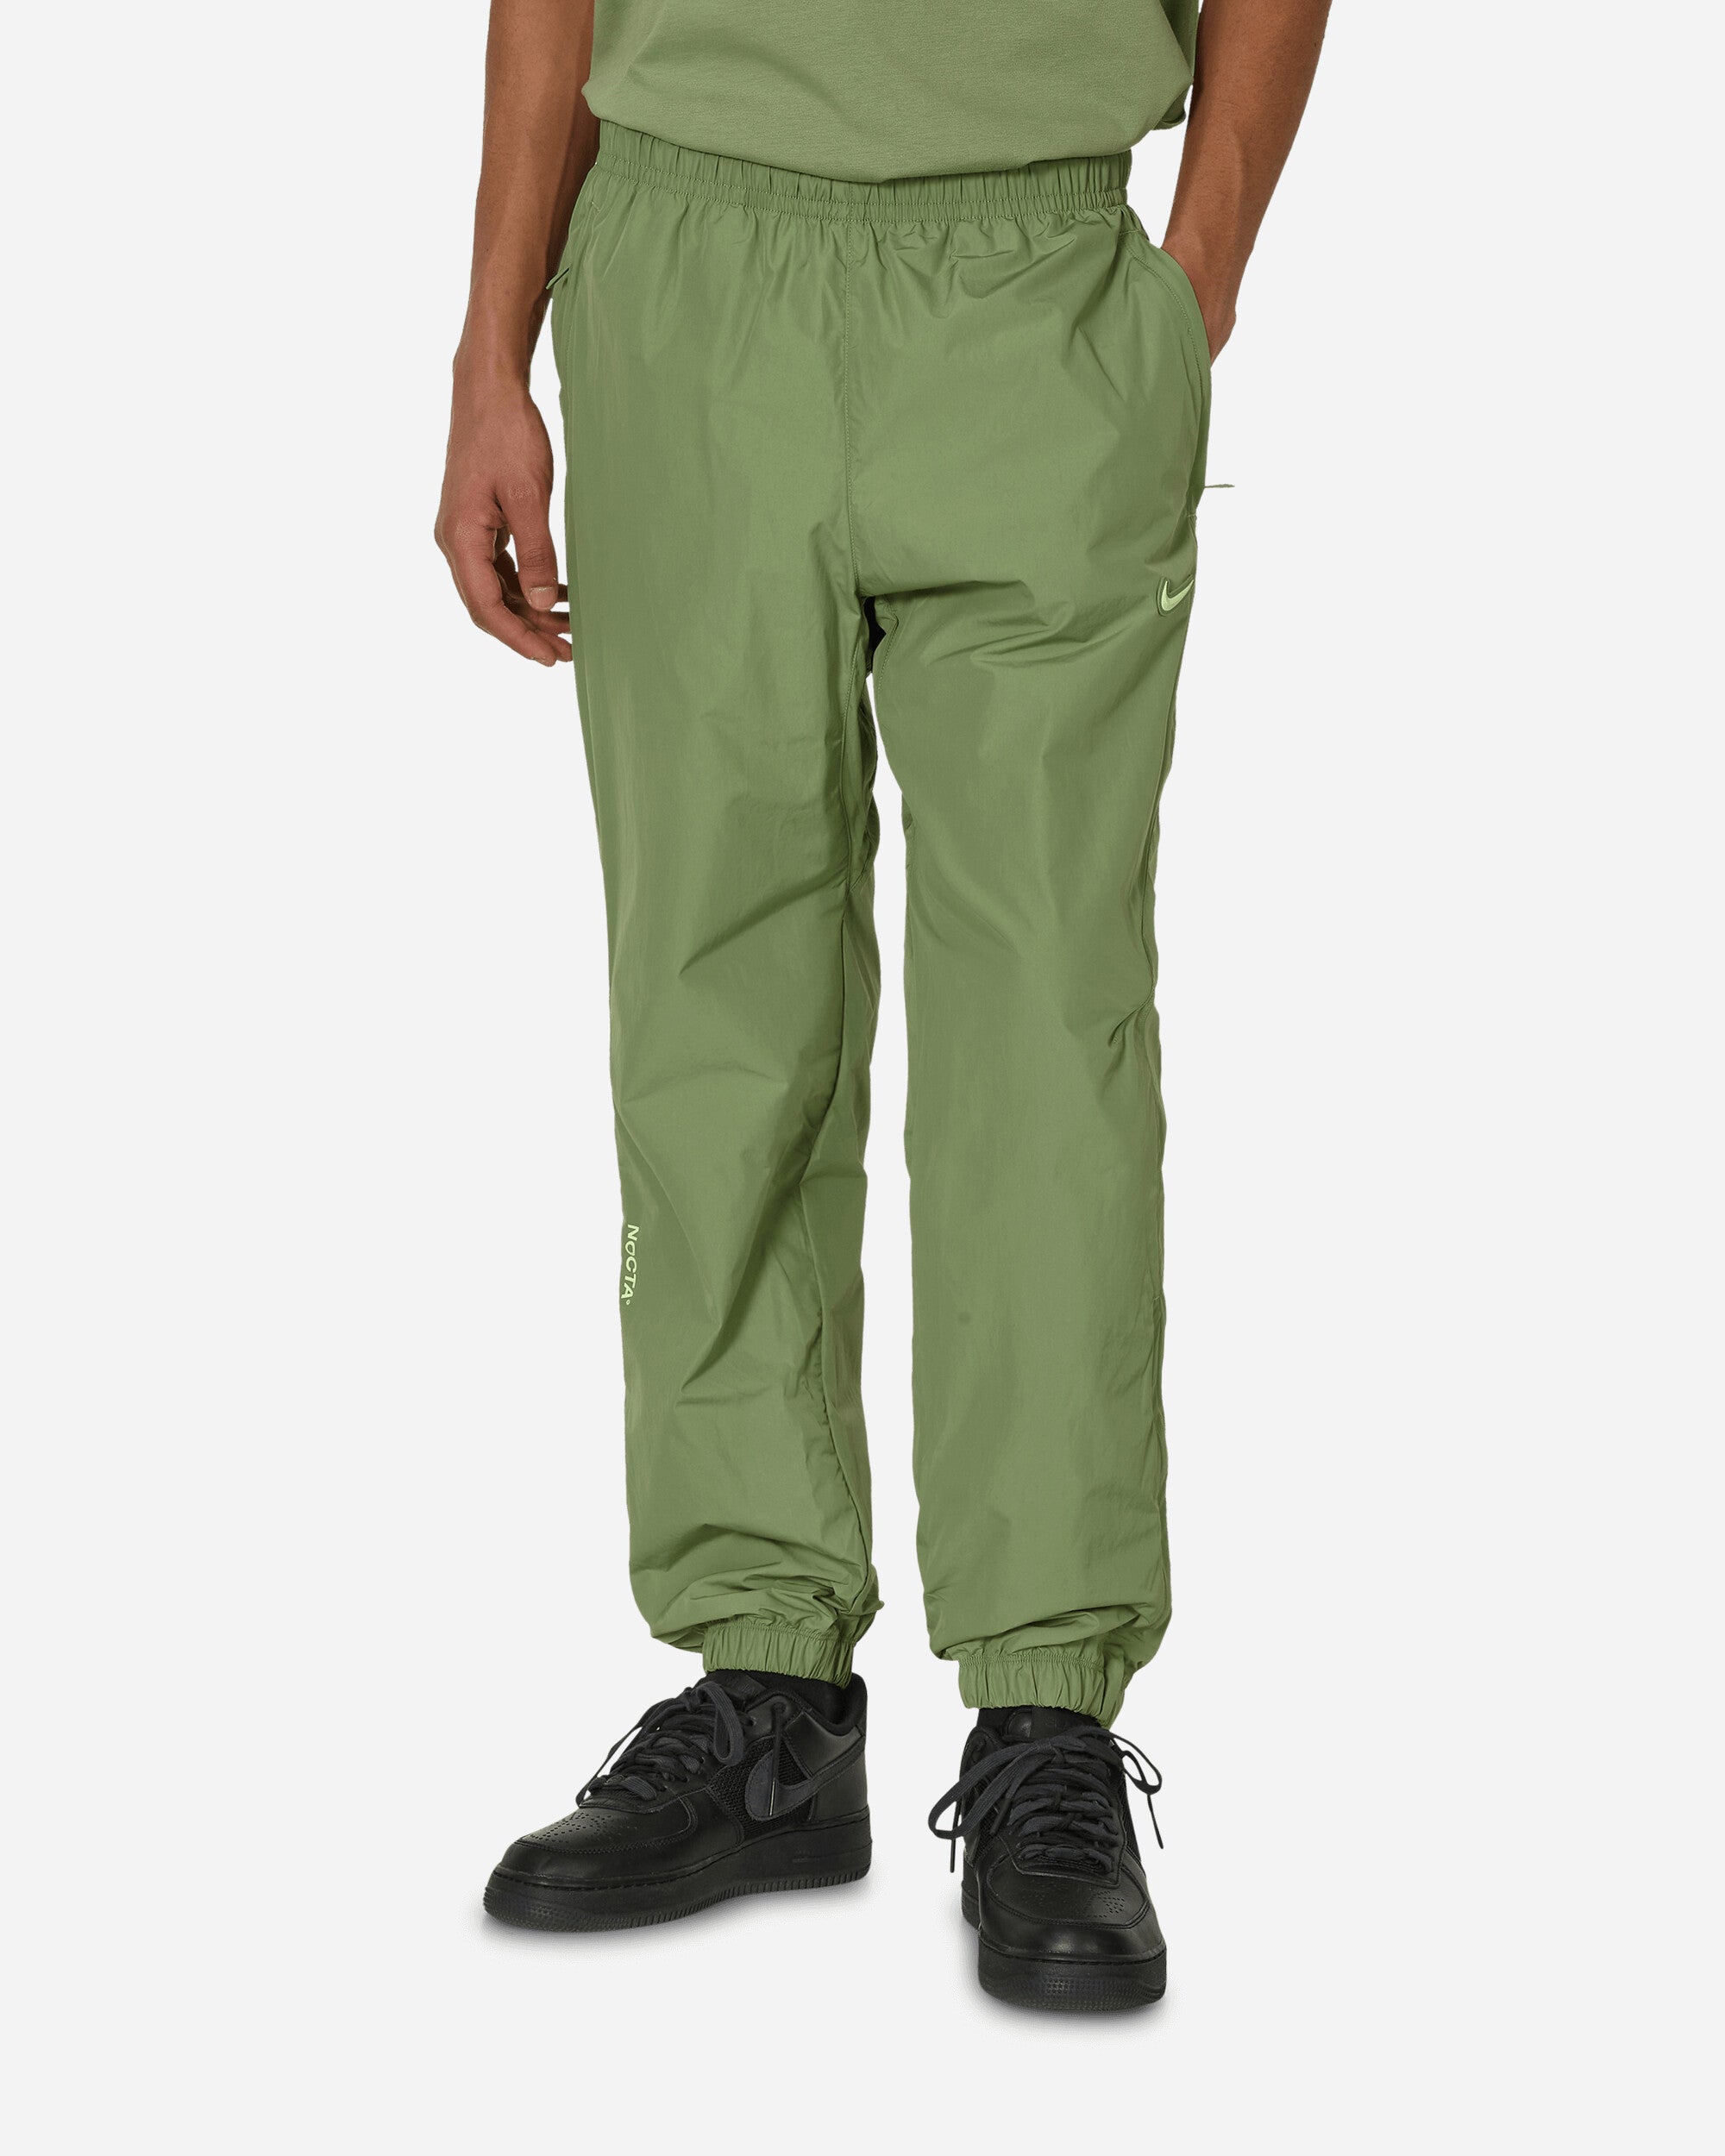 Nike NOCTA Woven Track Pants Oil Green - Slam Jam® Official Store